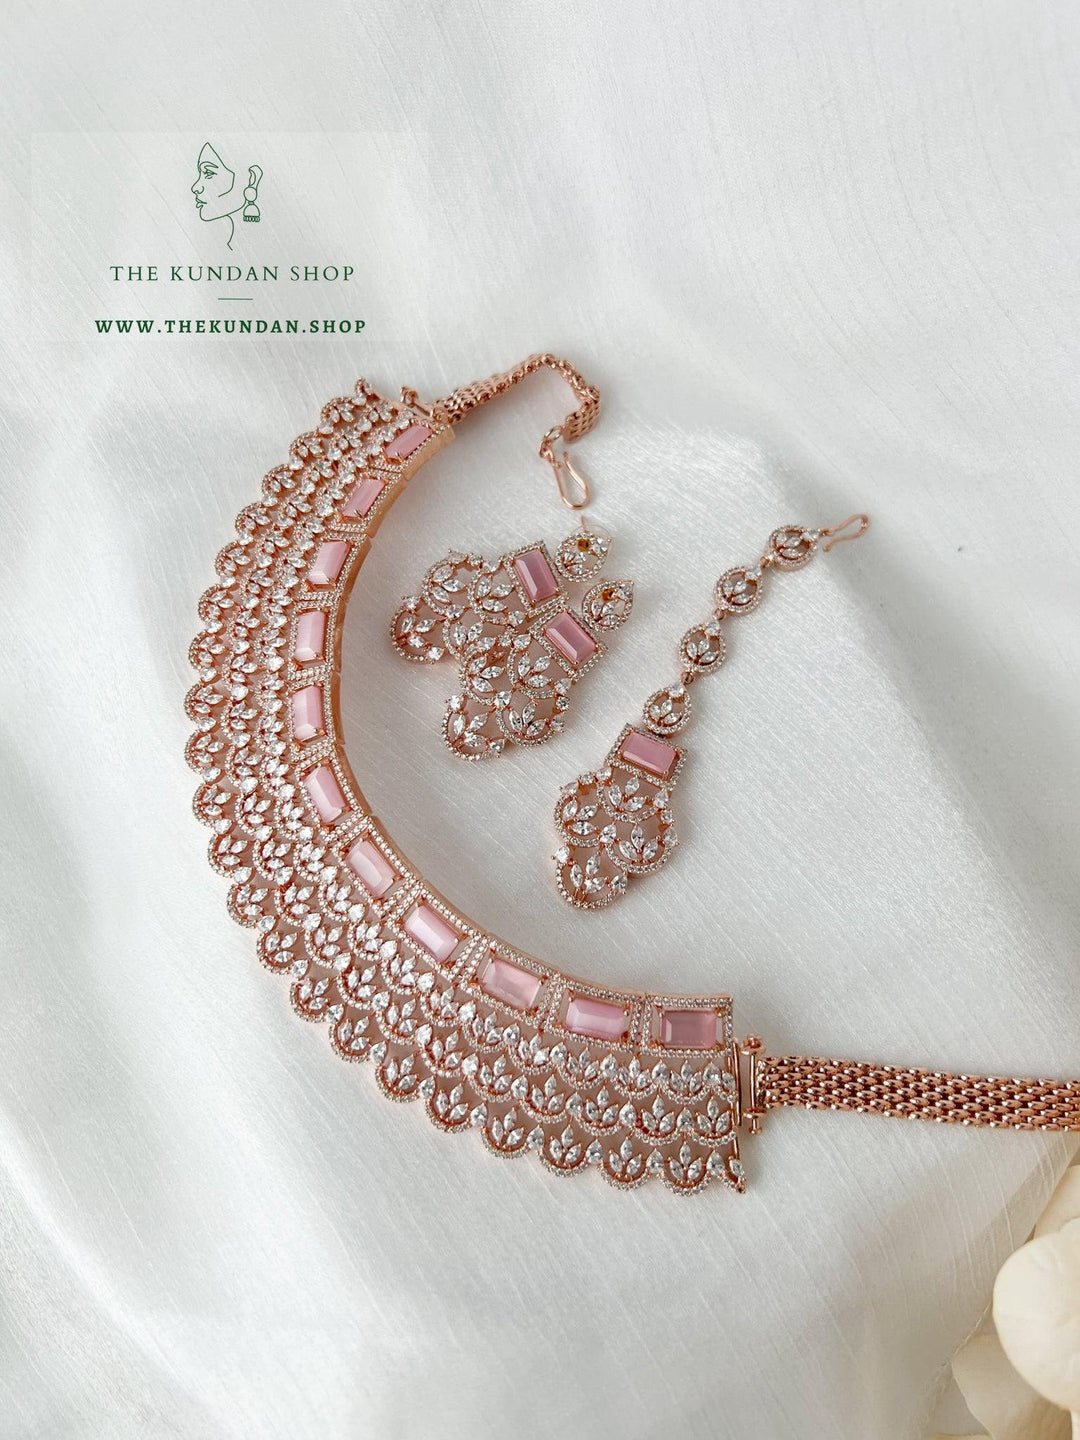 Assurance in Rose Gold & Pink Necklace Sets THE KUNDAN SHOP 